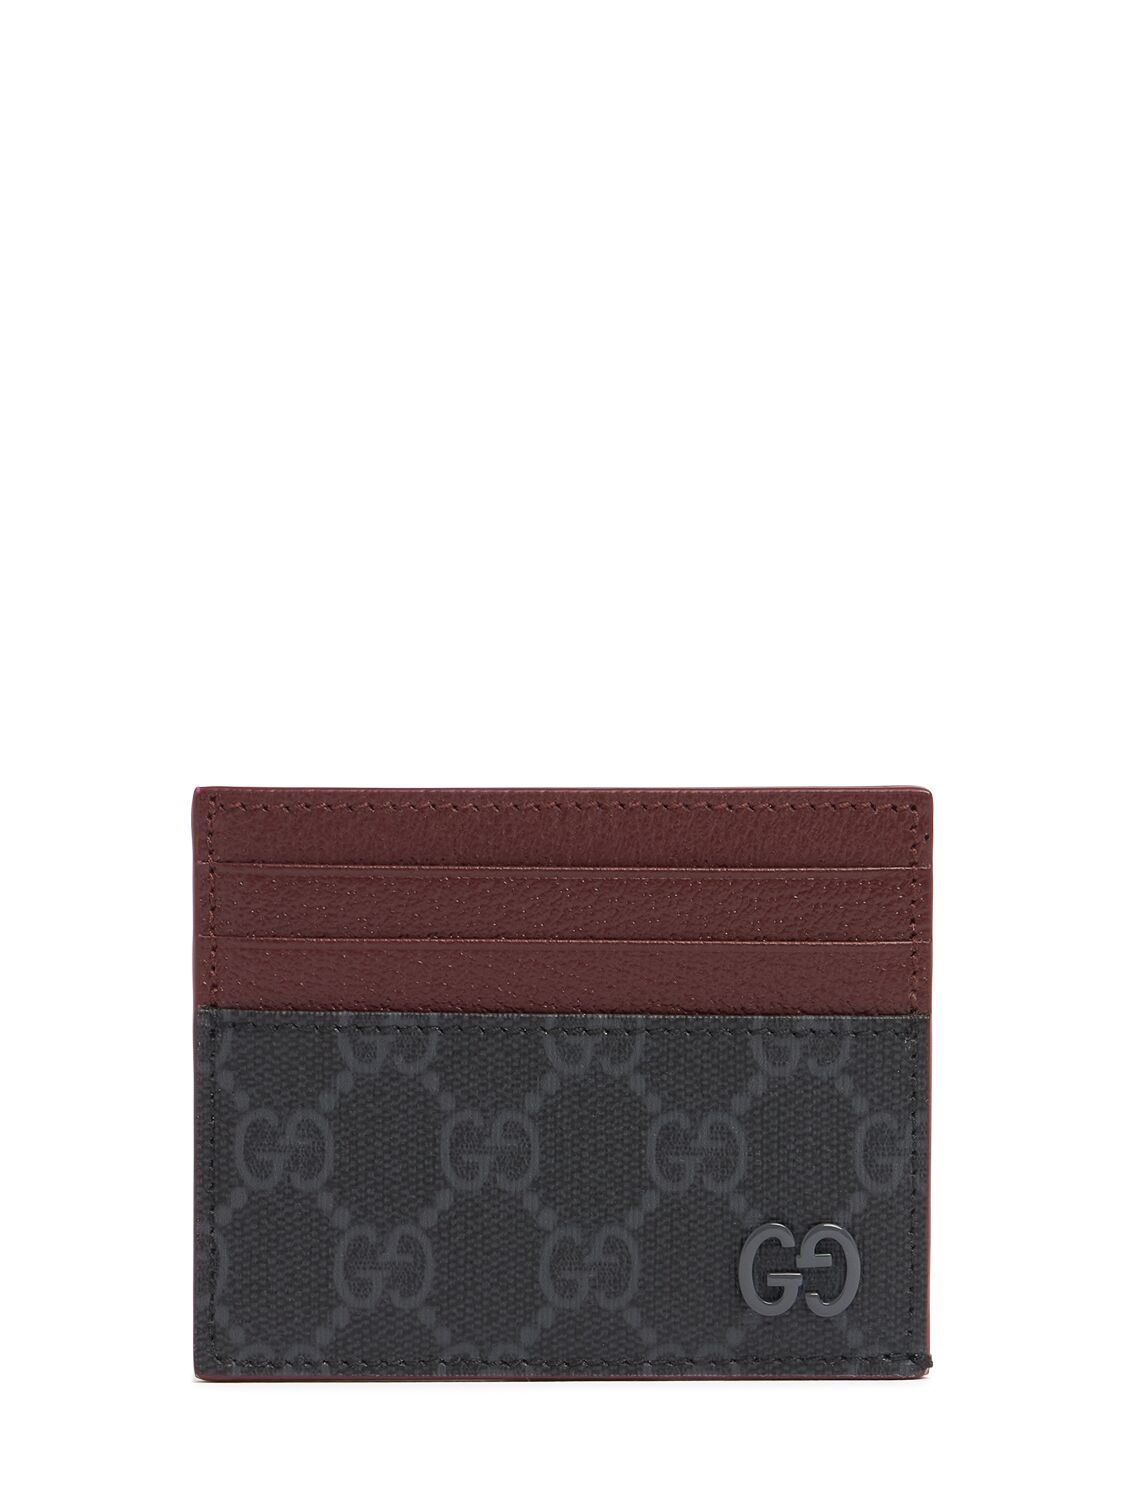 Gucci Bicolor Gg Card Case In Brown